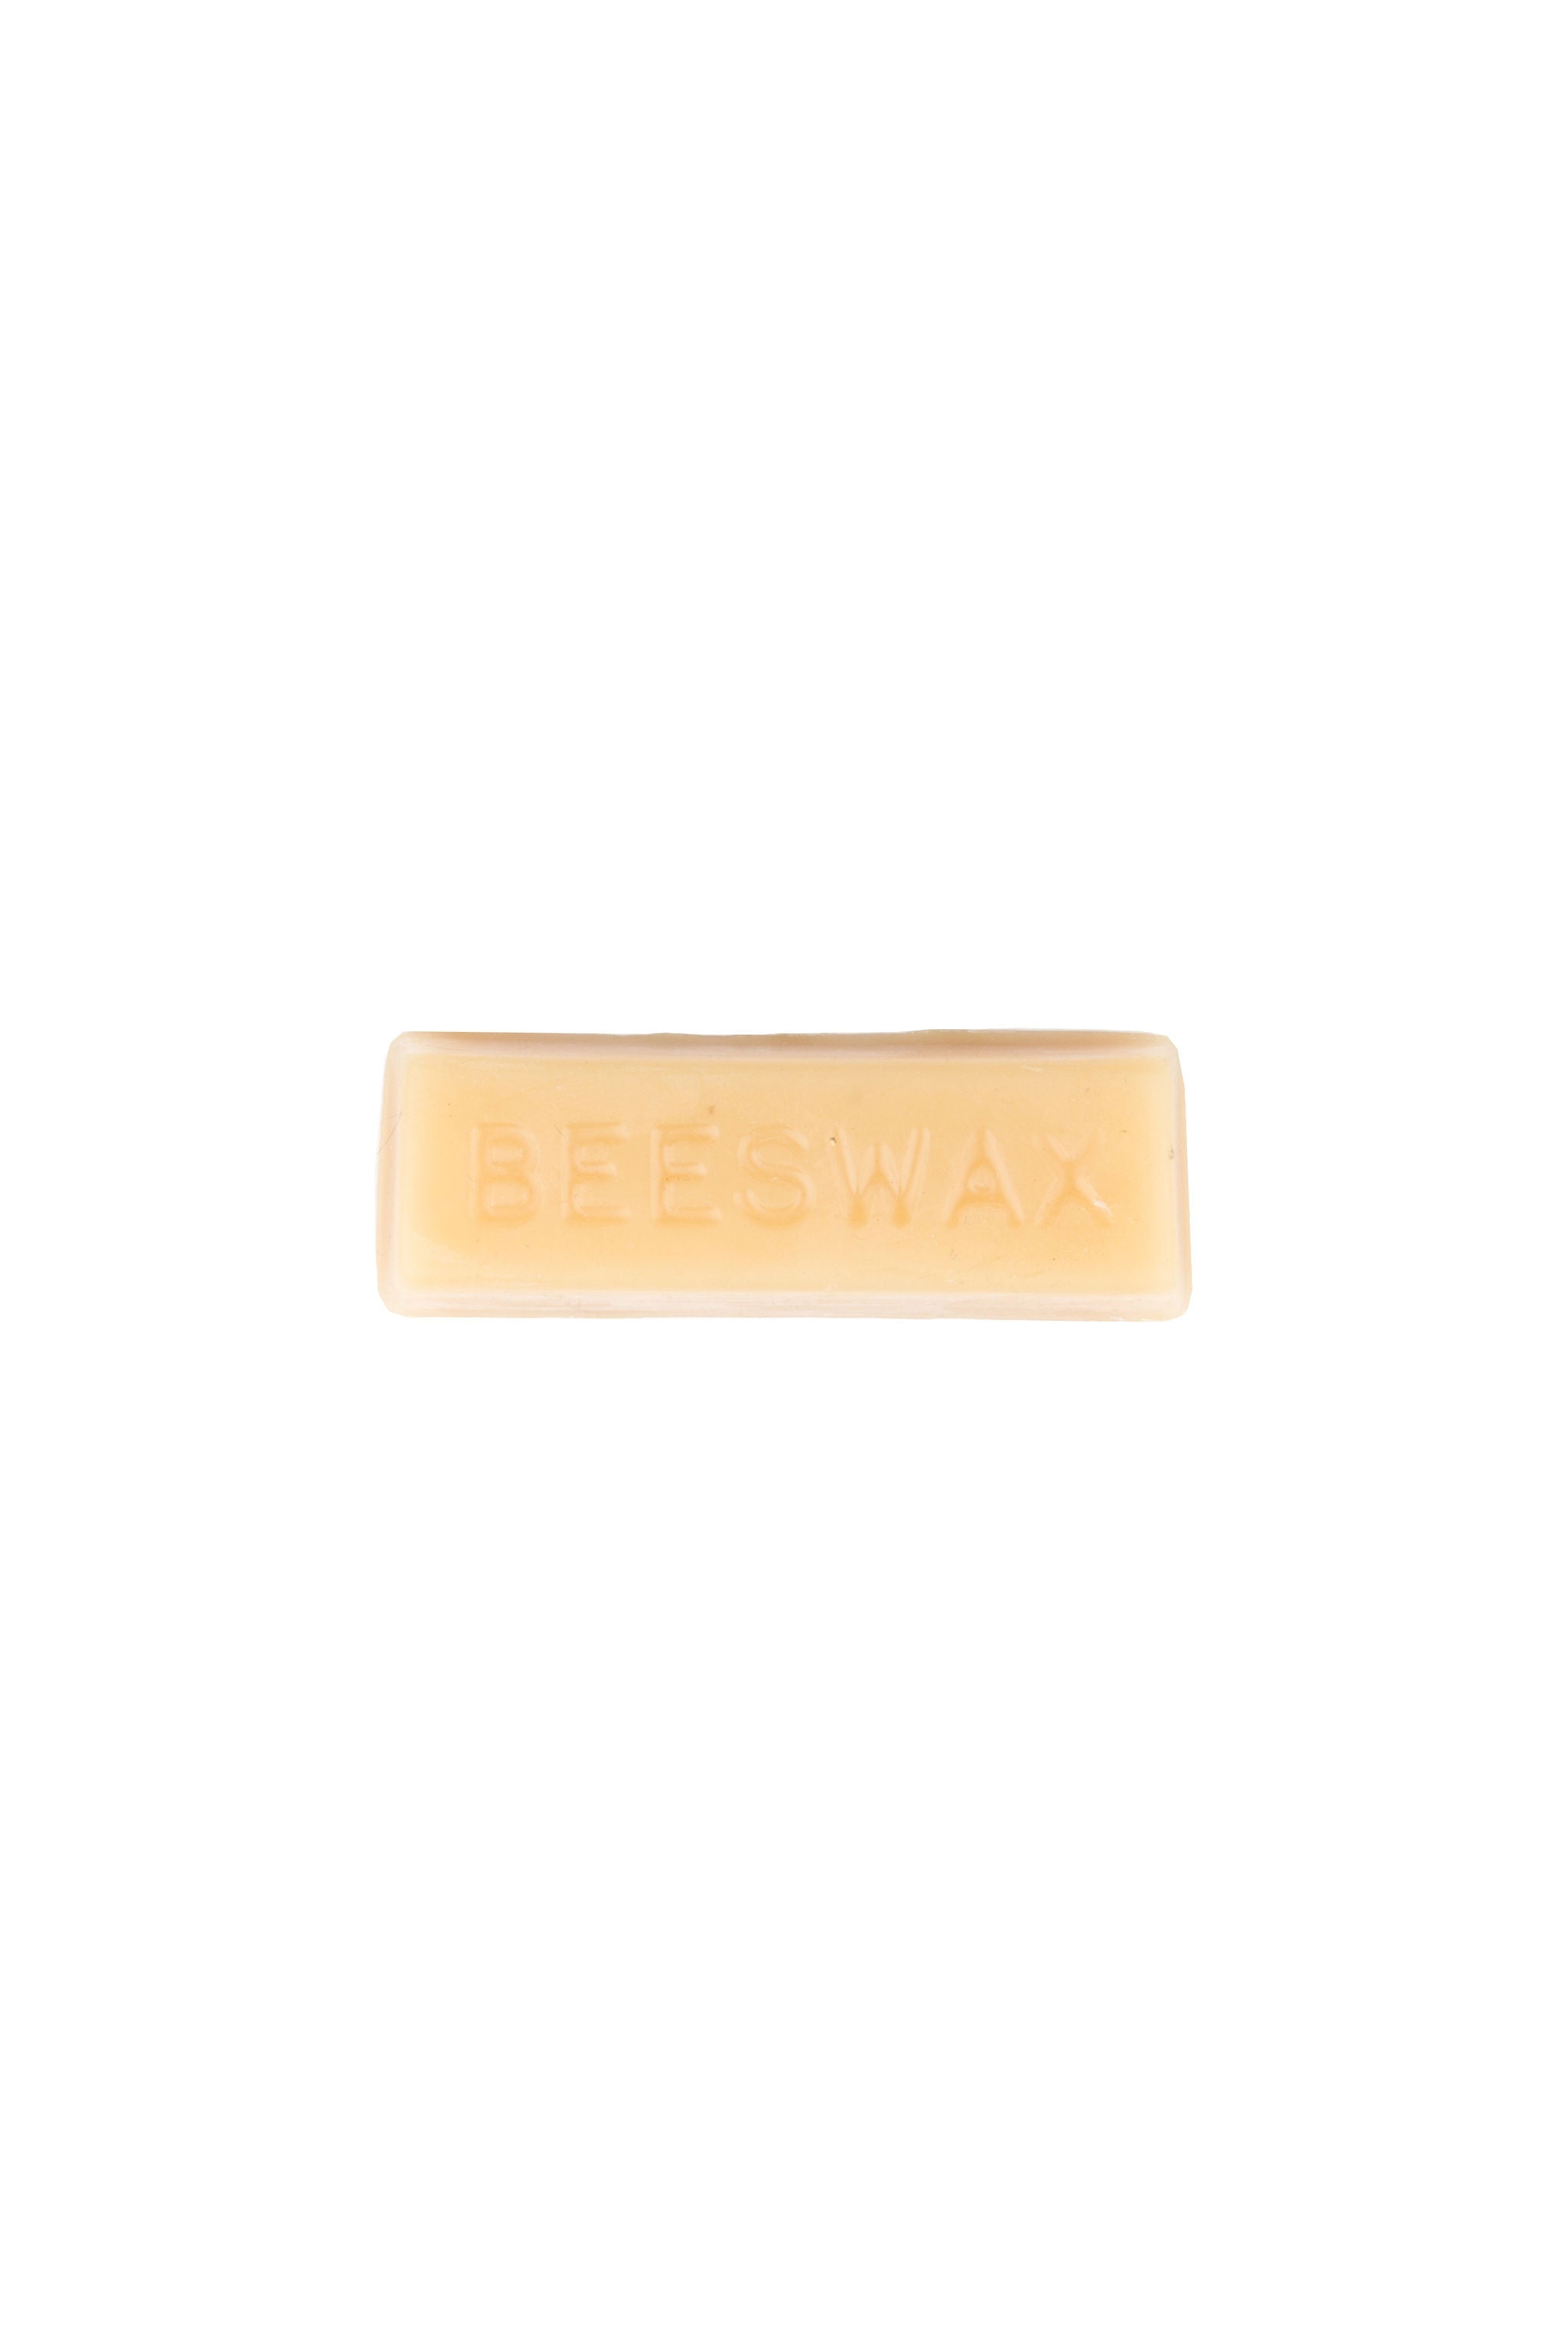 Fusion Beeswax Distressing Block